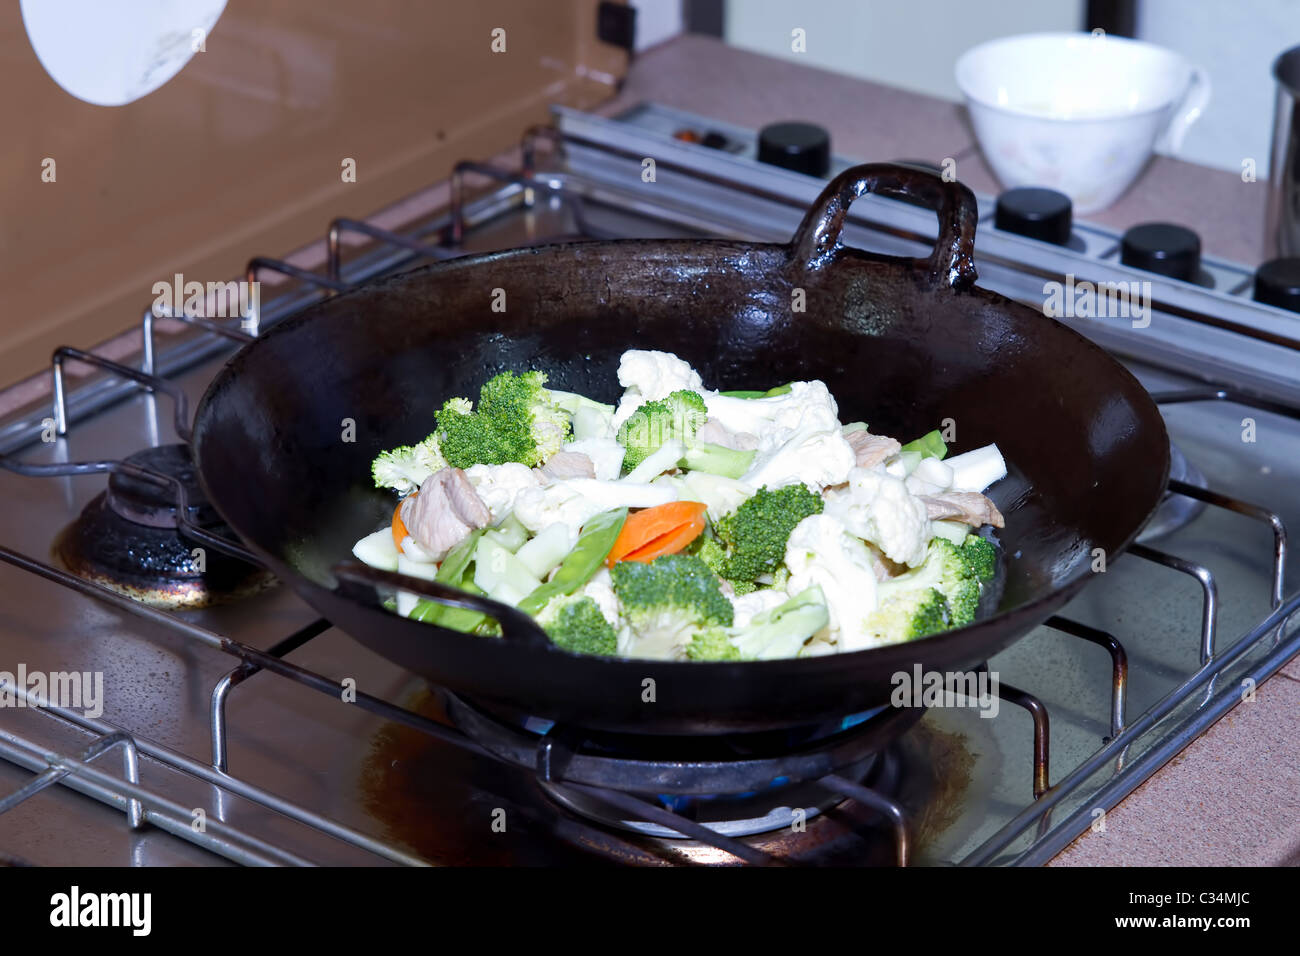 Stir Fry Broccoli Cauliflower Vegetable and Pork in Asian Wok Stock Photo